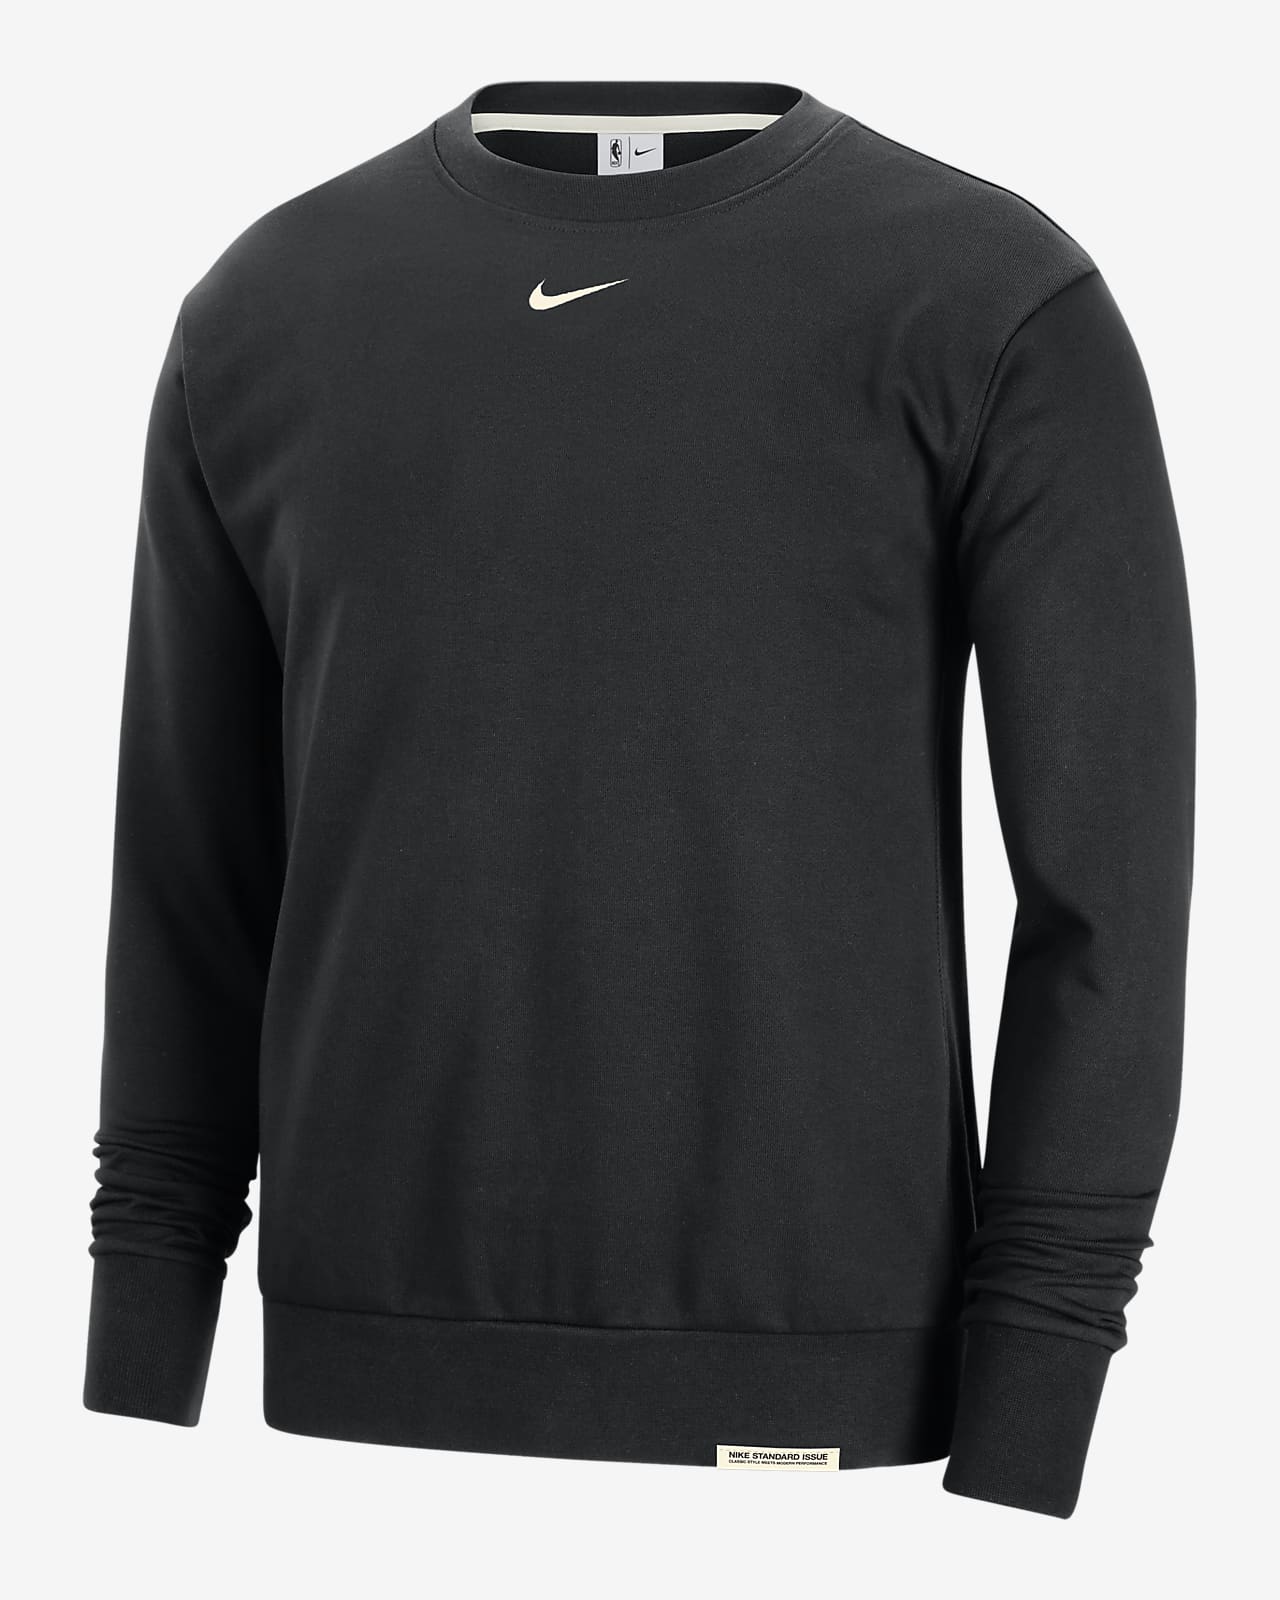 Team 31 Standard Issue Men's Nike Dri-FIT NBA Sweatshirt. Nike AE